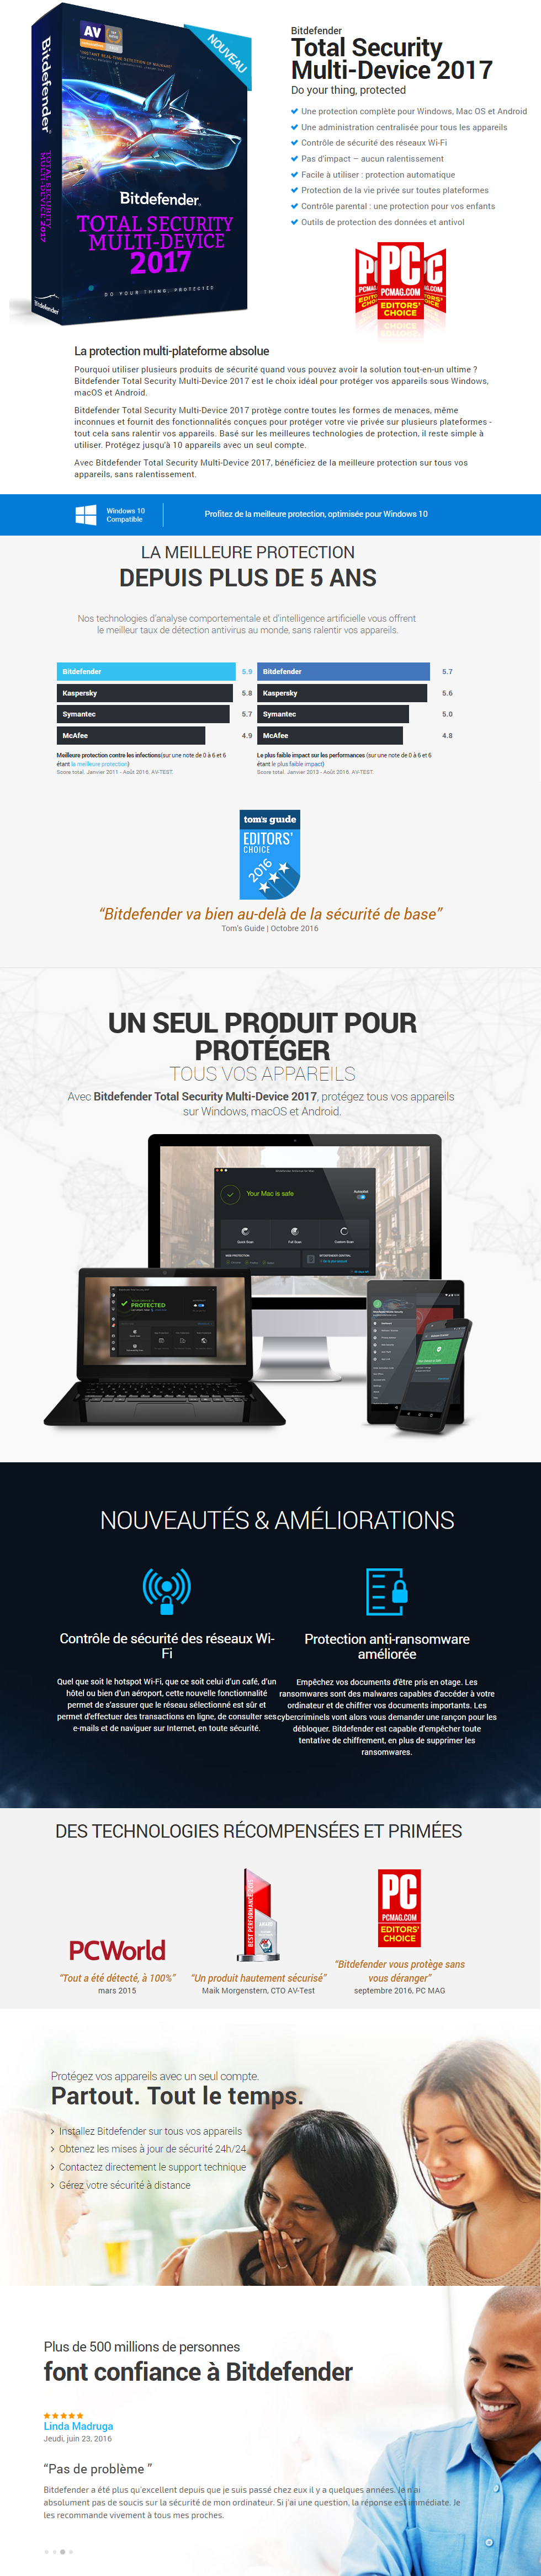 Acheter Bitdefender Total Security Multi-Device 2017 - 1 an, 5 utilisateurs / appareils illimités Maroc